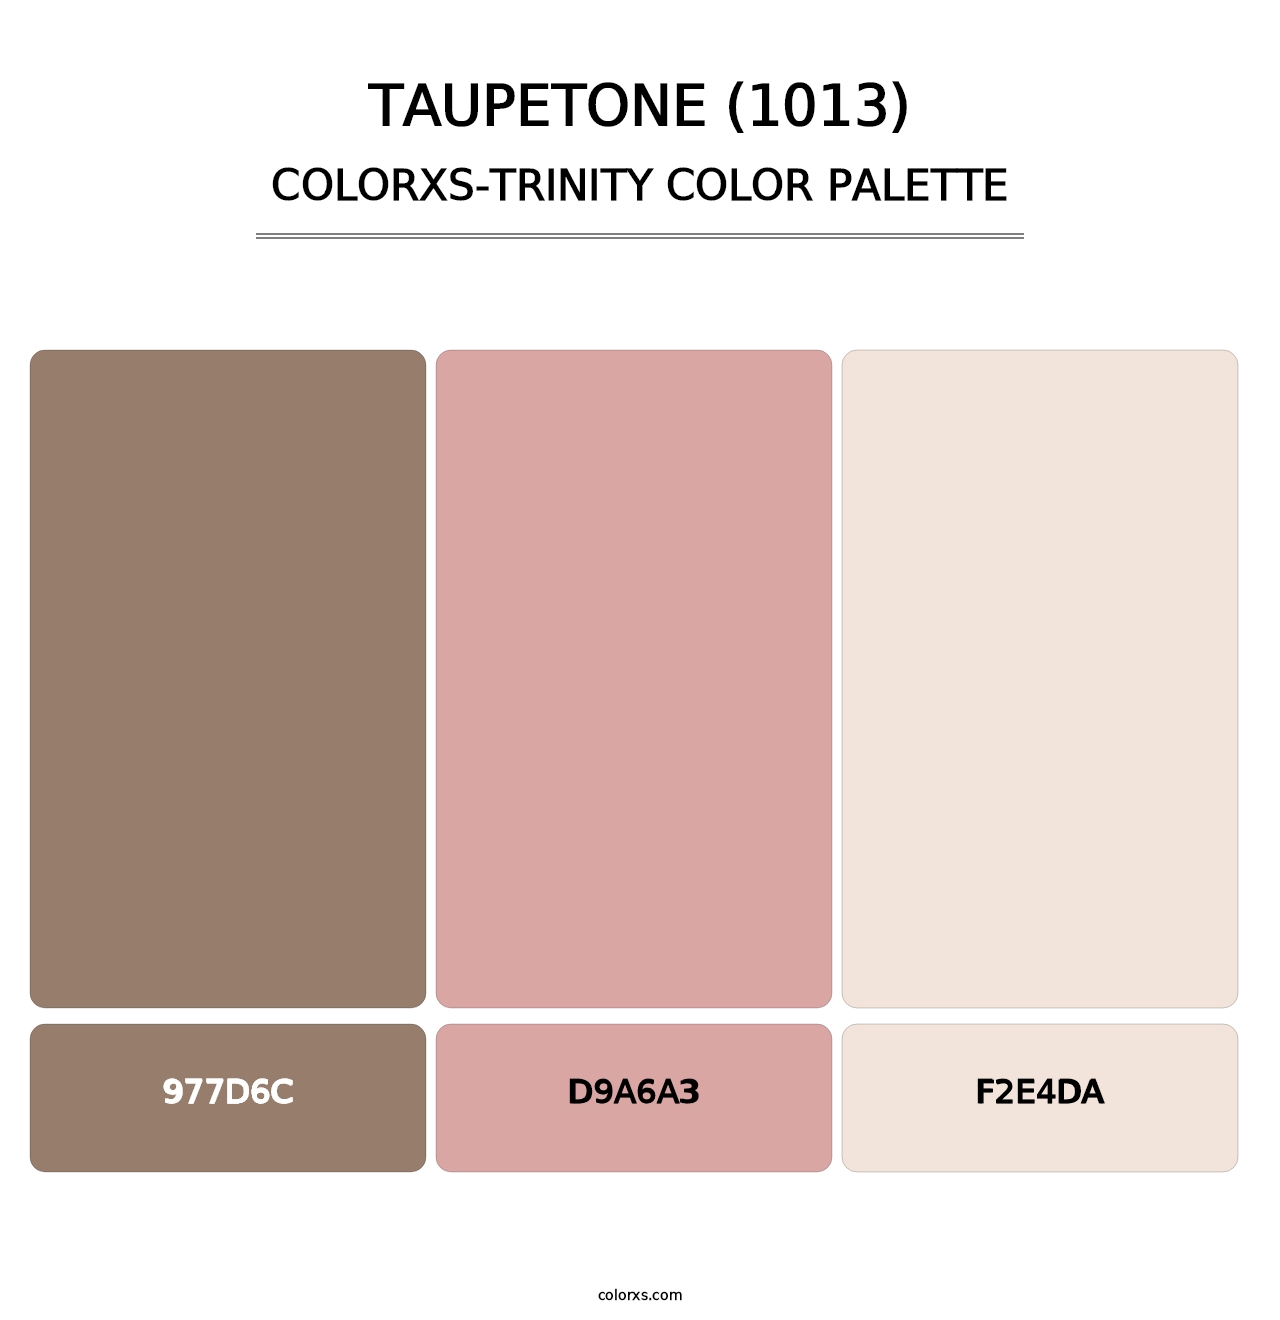 Taupetone (1013) - Colorxs Trinity Palette